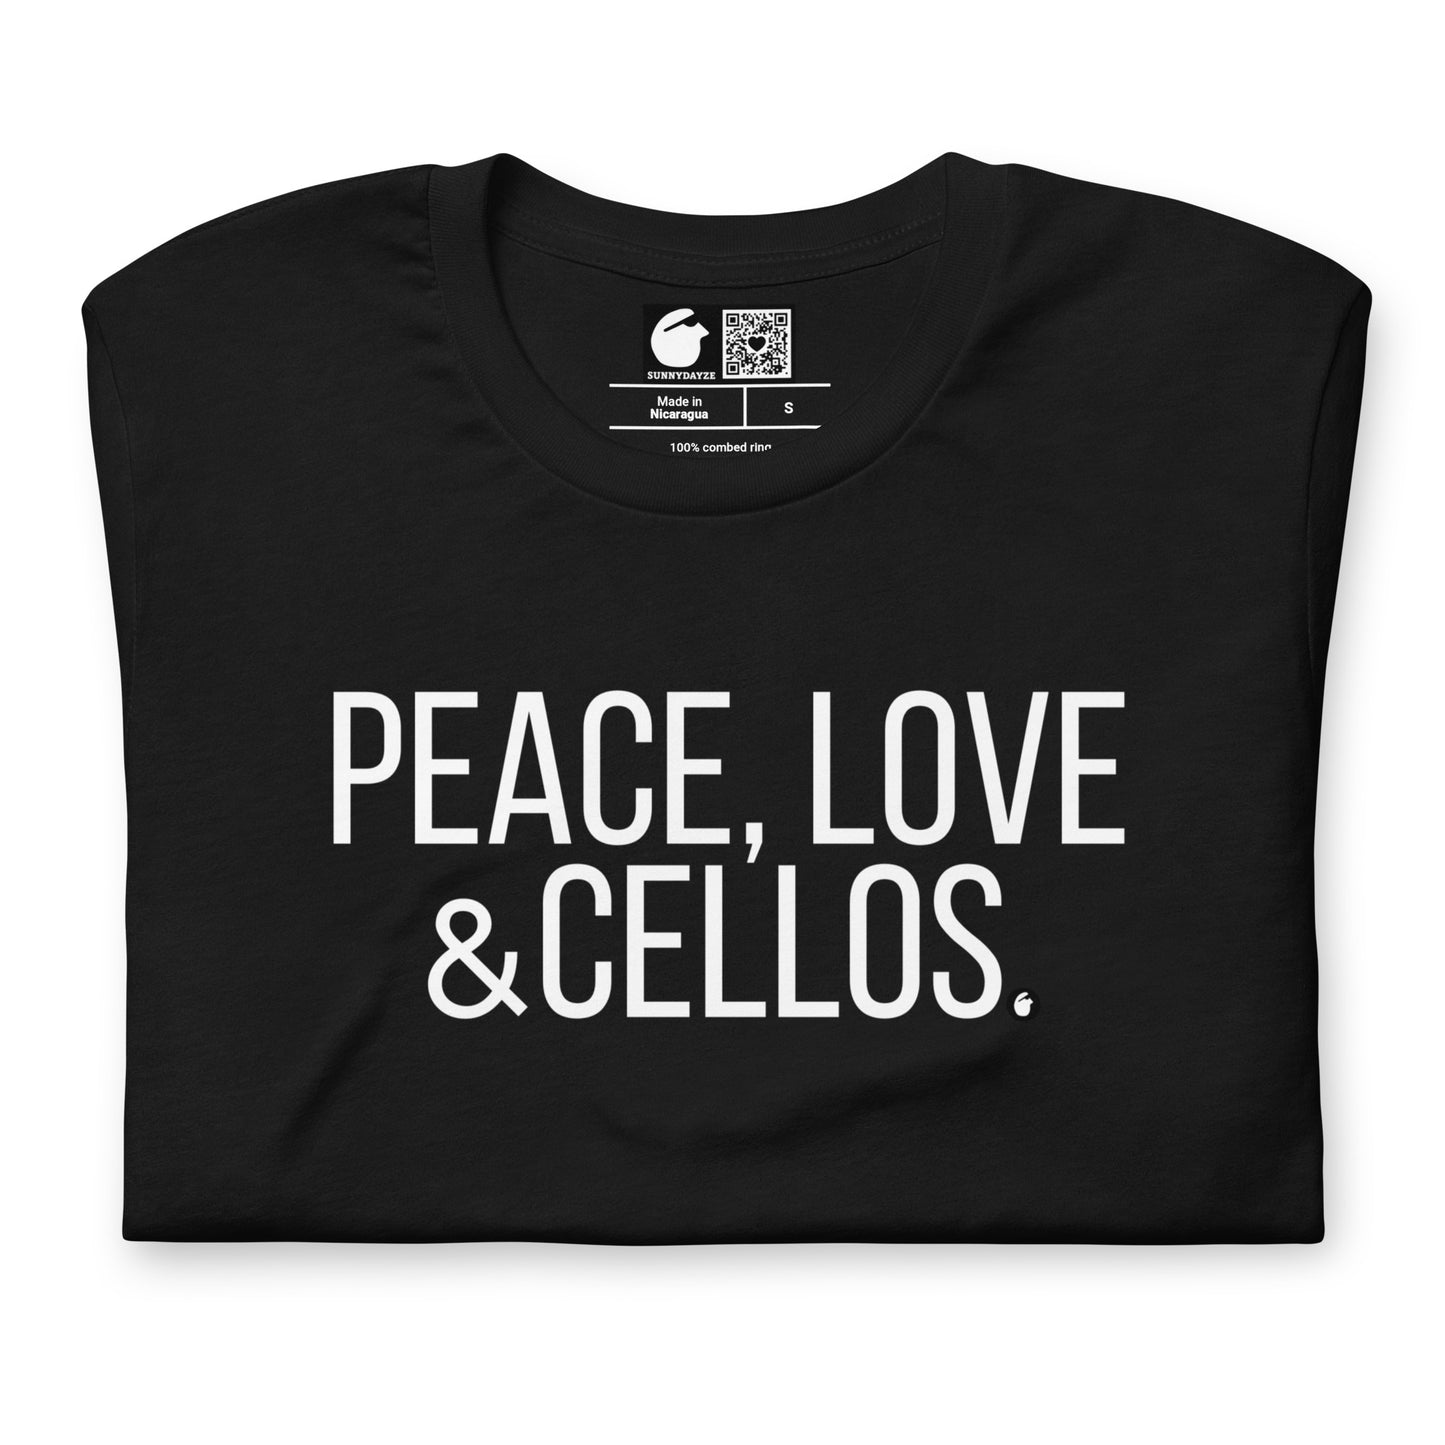 CELLOS Short-Sleeve Unisex t-shirt